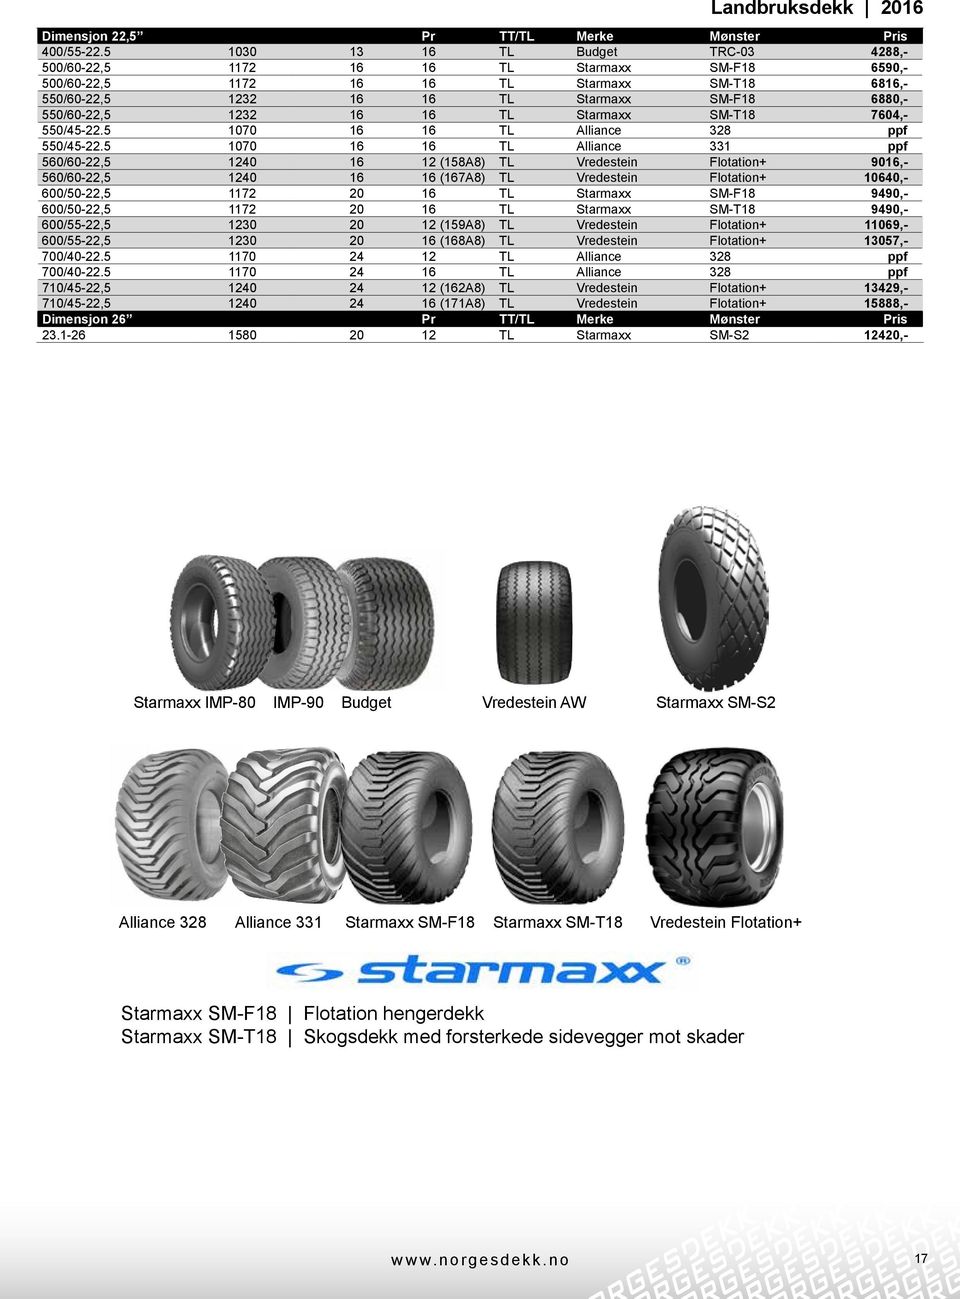 Starmaxx SM-T18 7604,- 550/45-22.5 1070 16 16 Alliance 328 ppf 550/45-22.